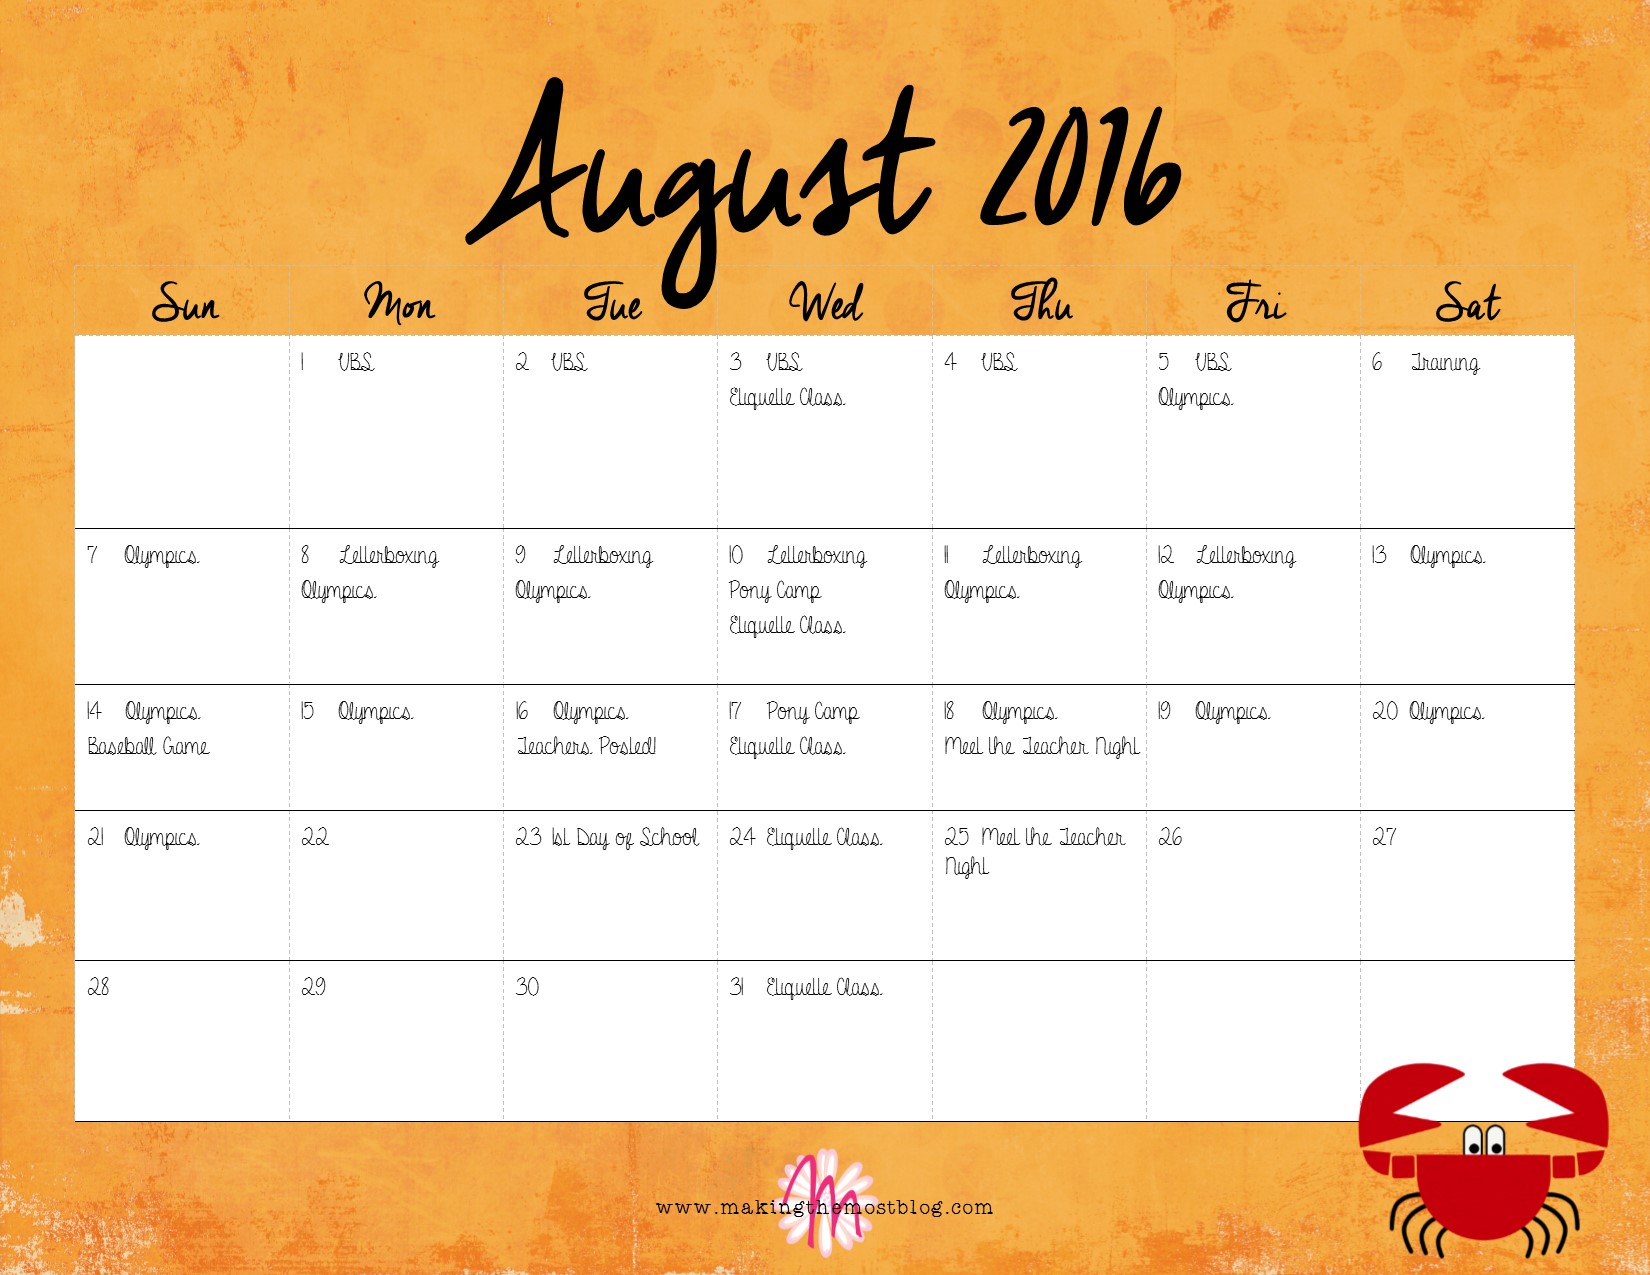 August 2016 (FREE Printable!) Super Summer Calendar | Making the Most Blog